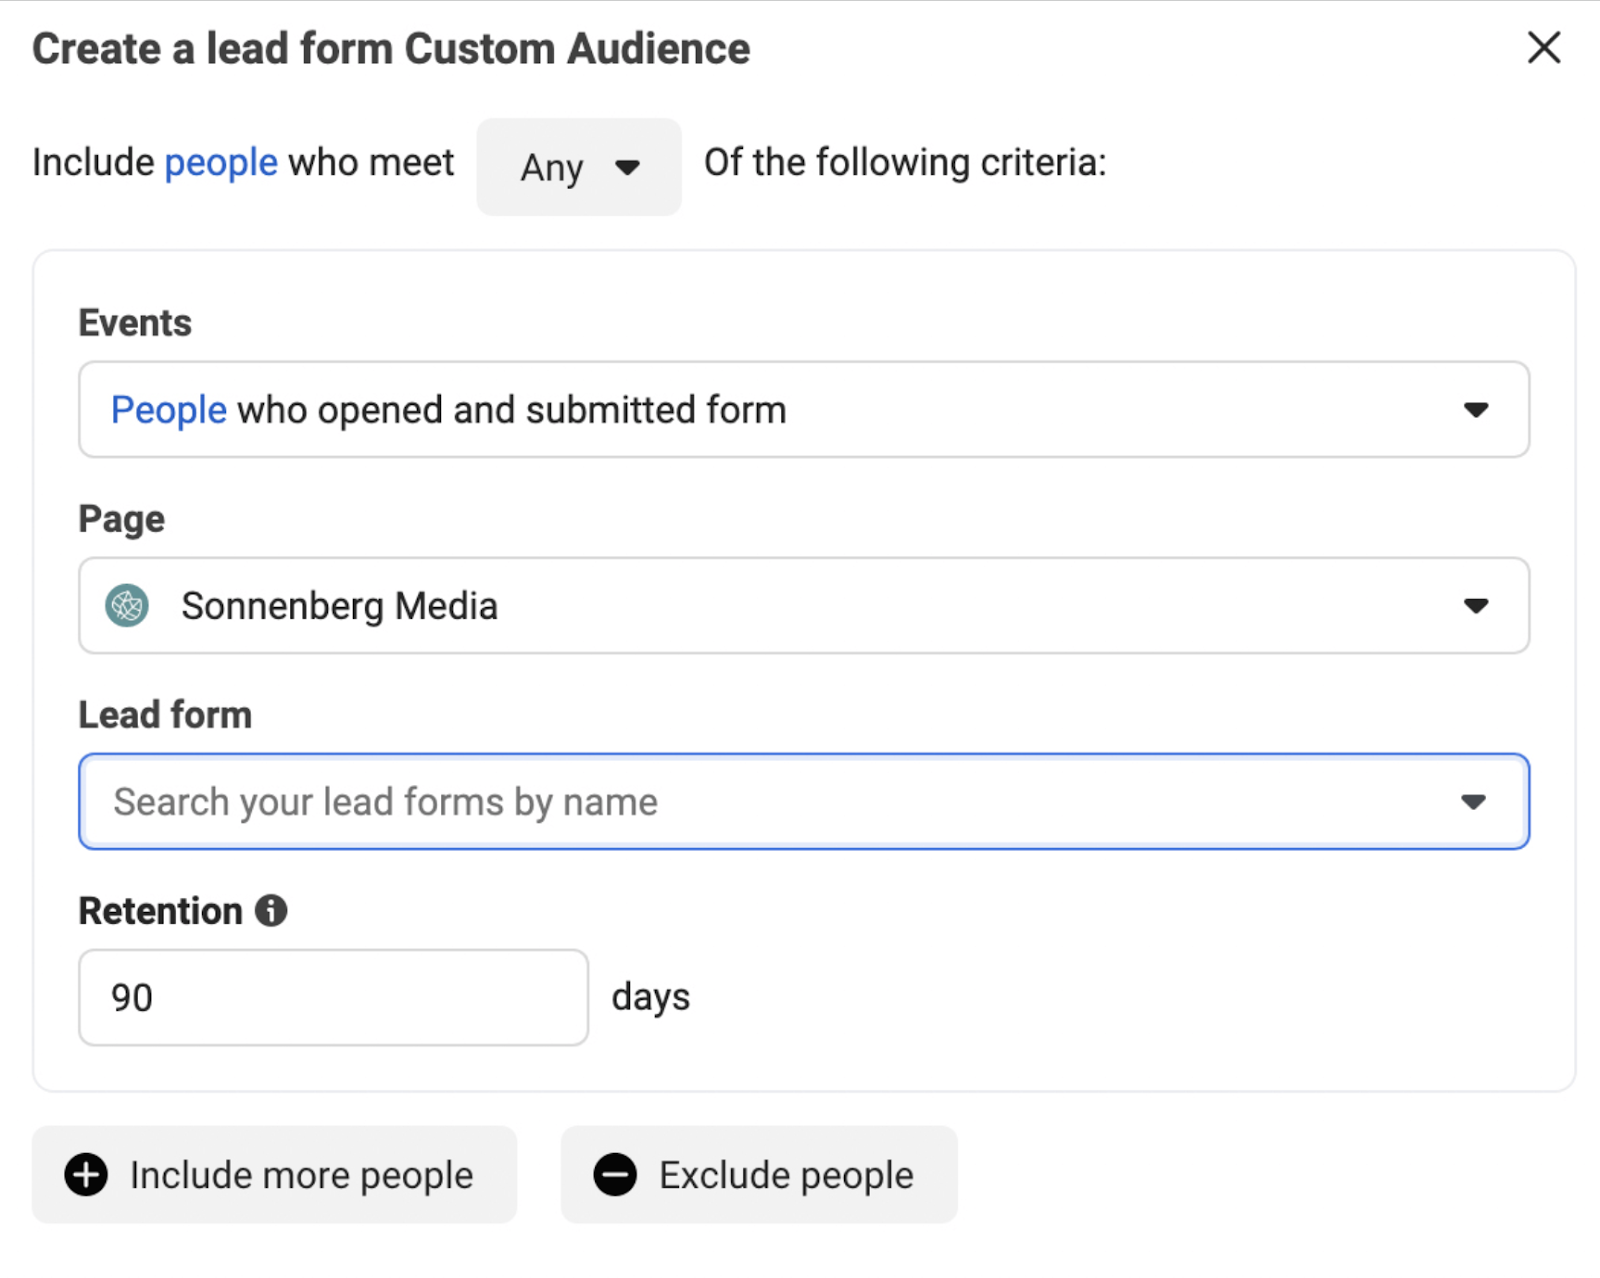 Create custom audiences for retargeting